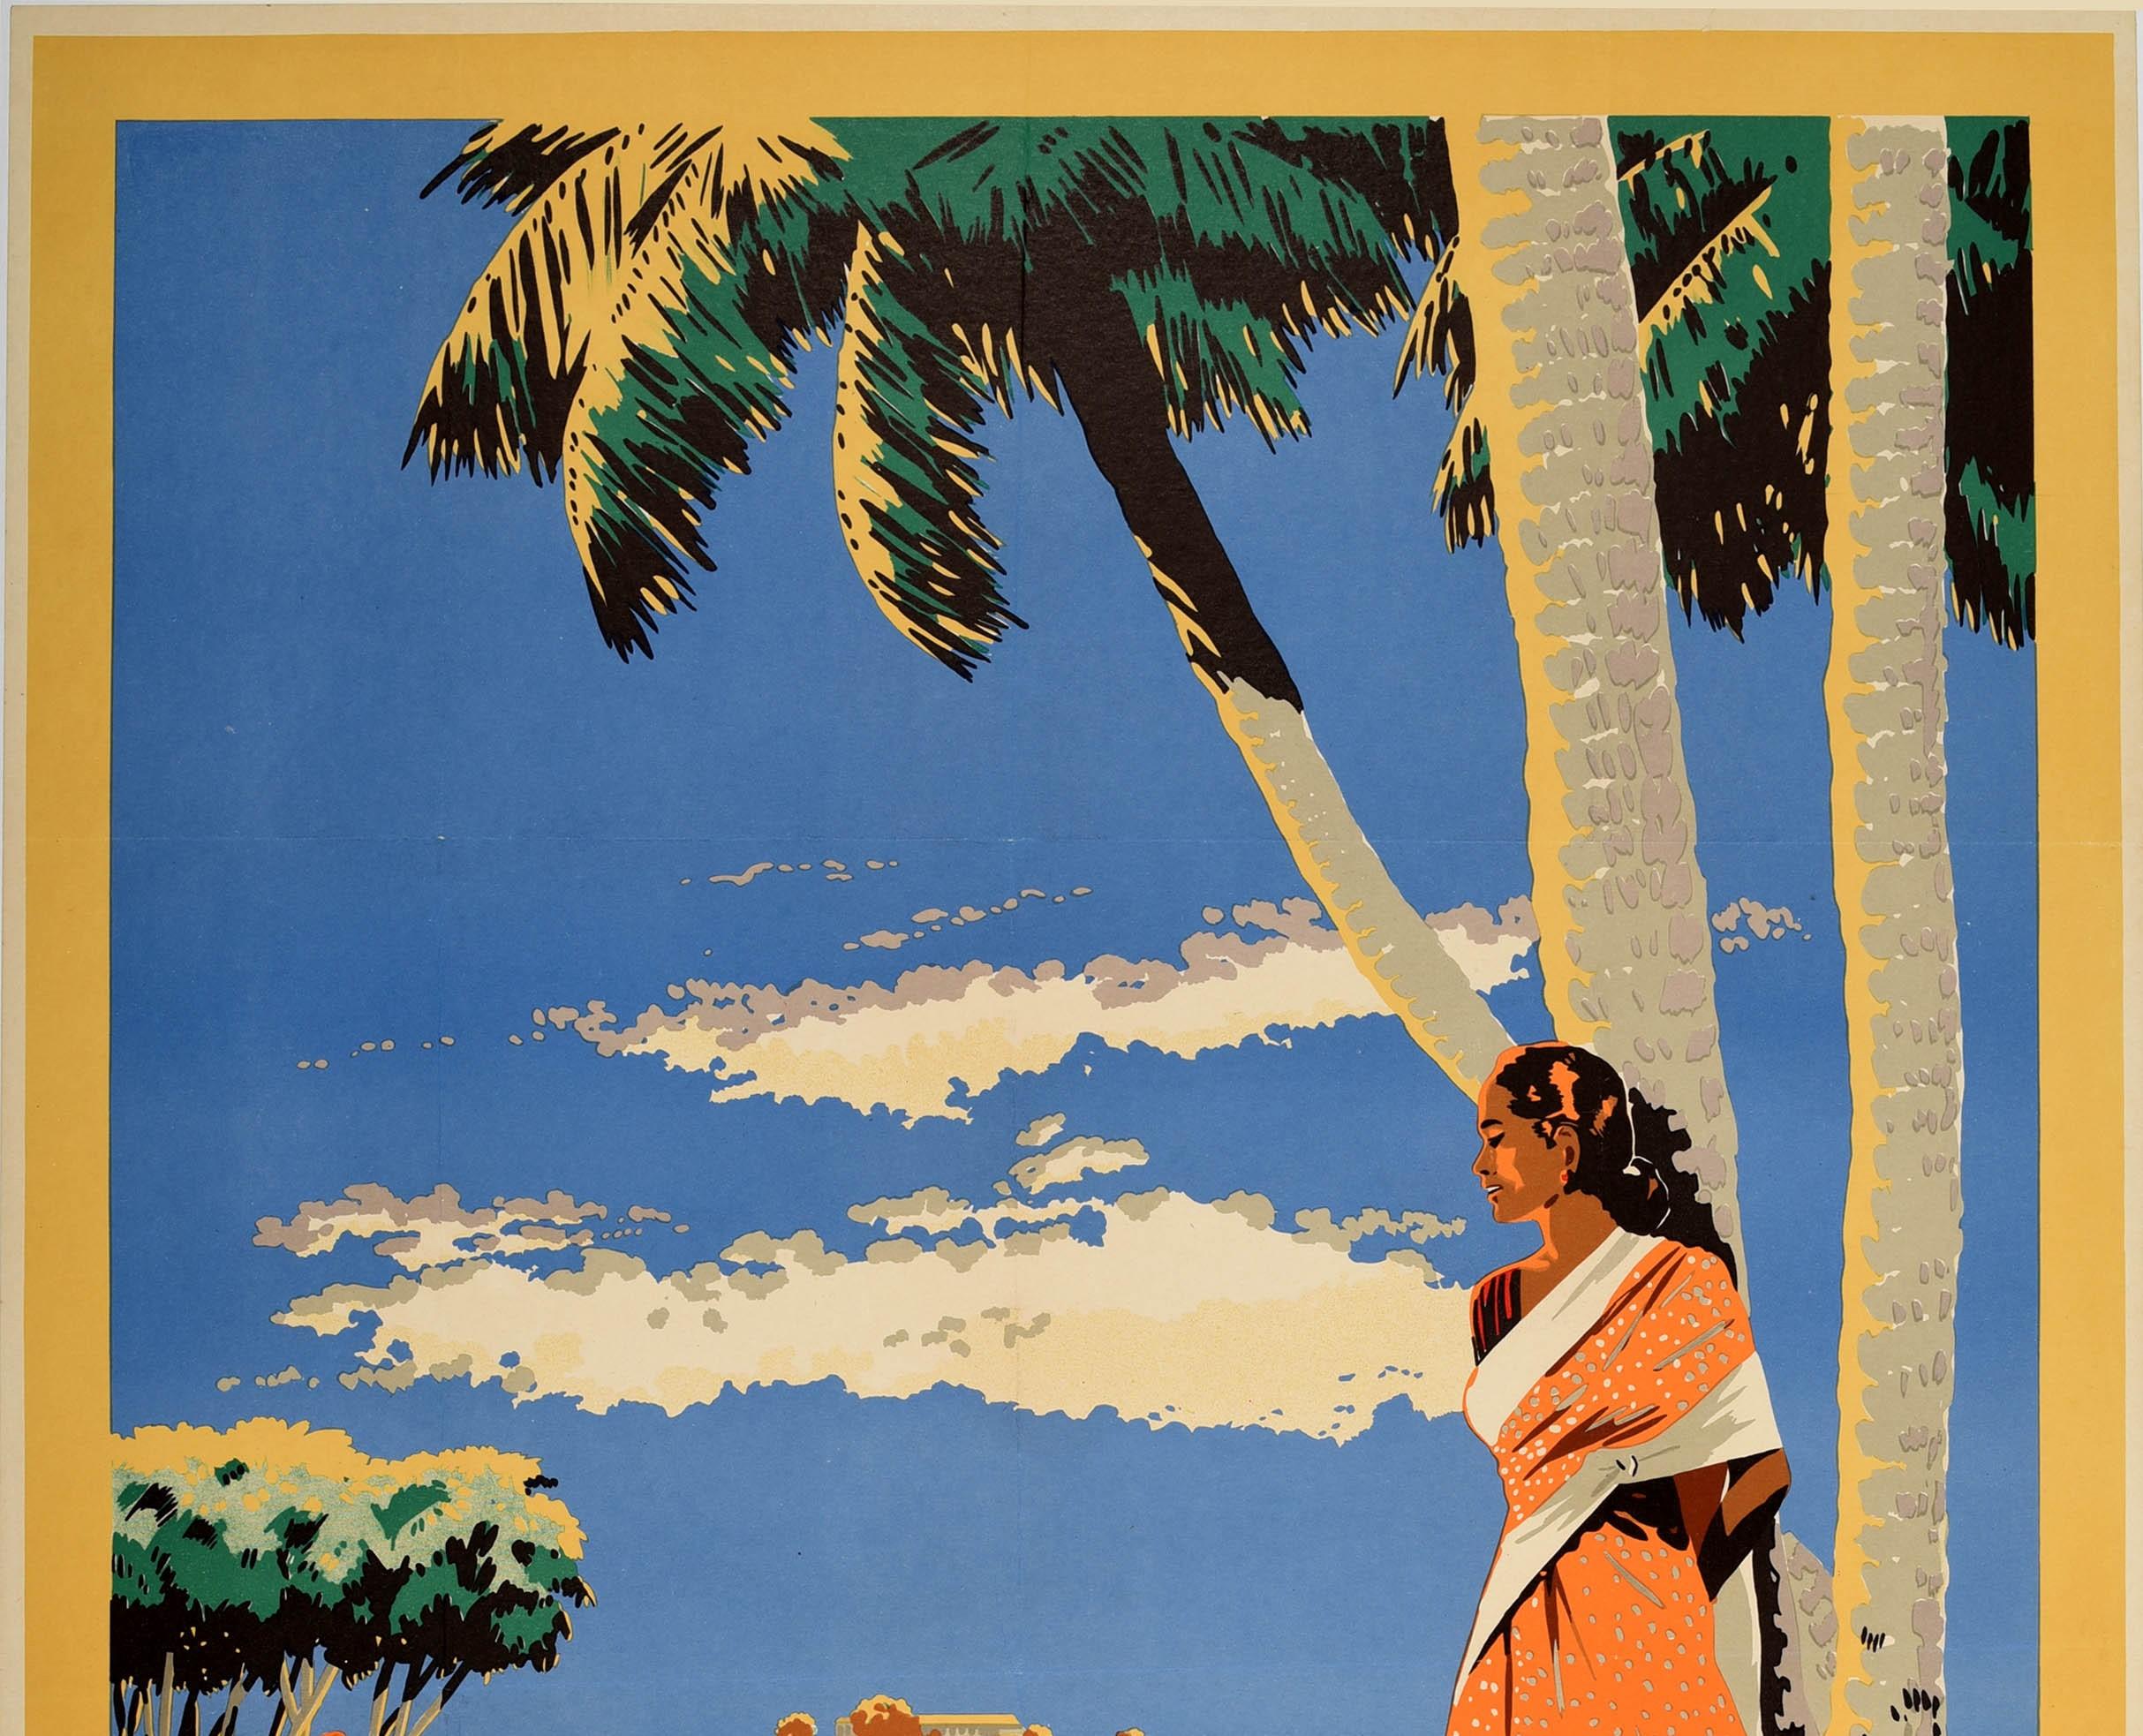 Original Vintage Poster Ceylon Beach Picnic Sri Lanka Asia Holiday Travel Art - Print by CKL Samarasinha